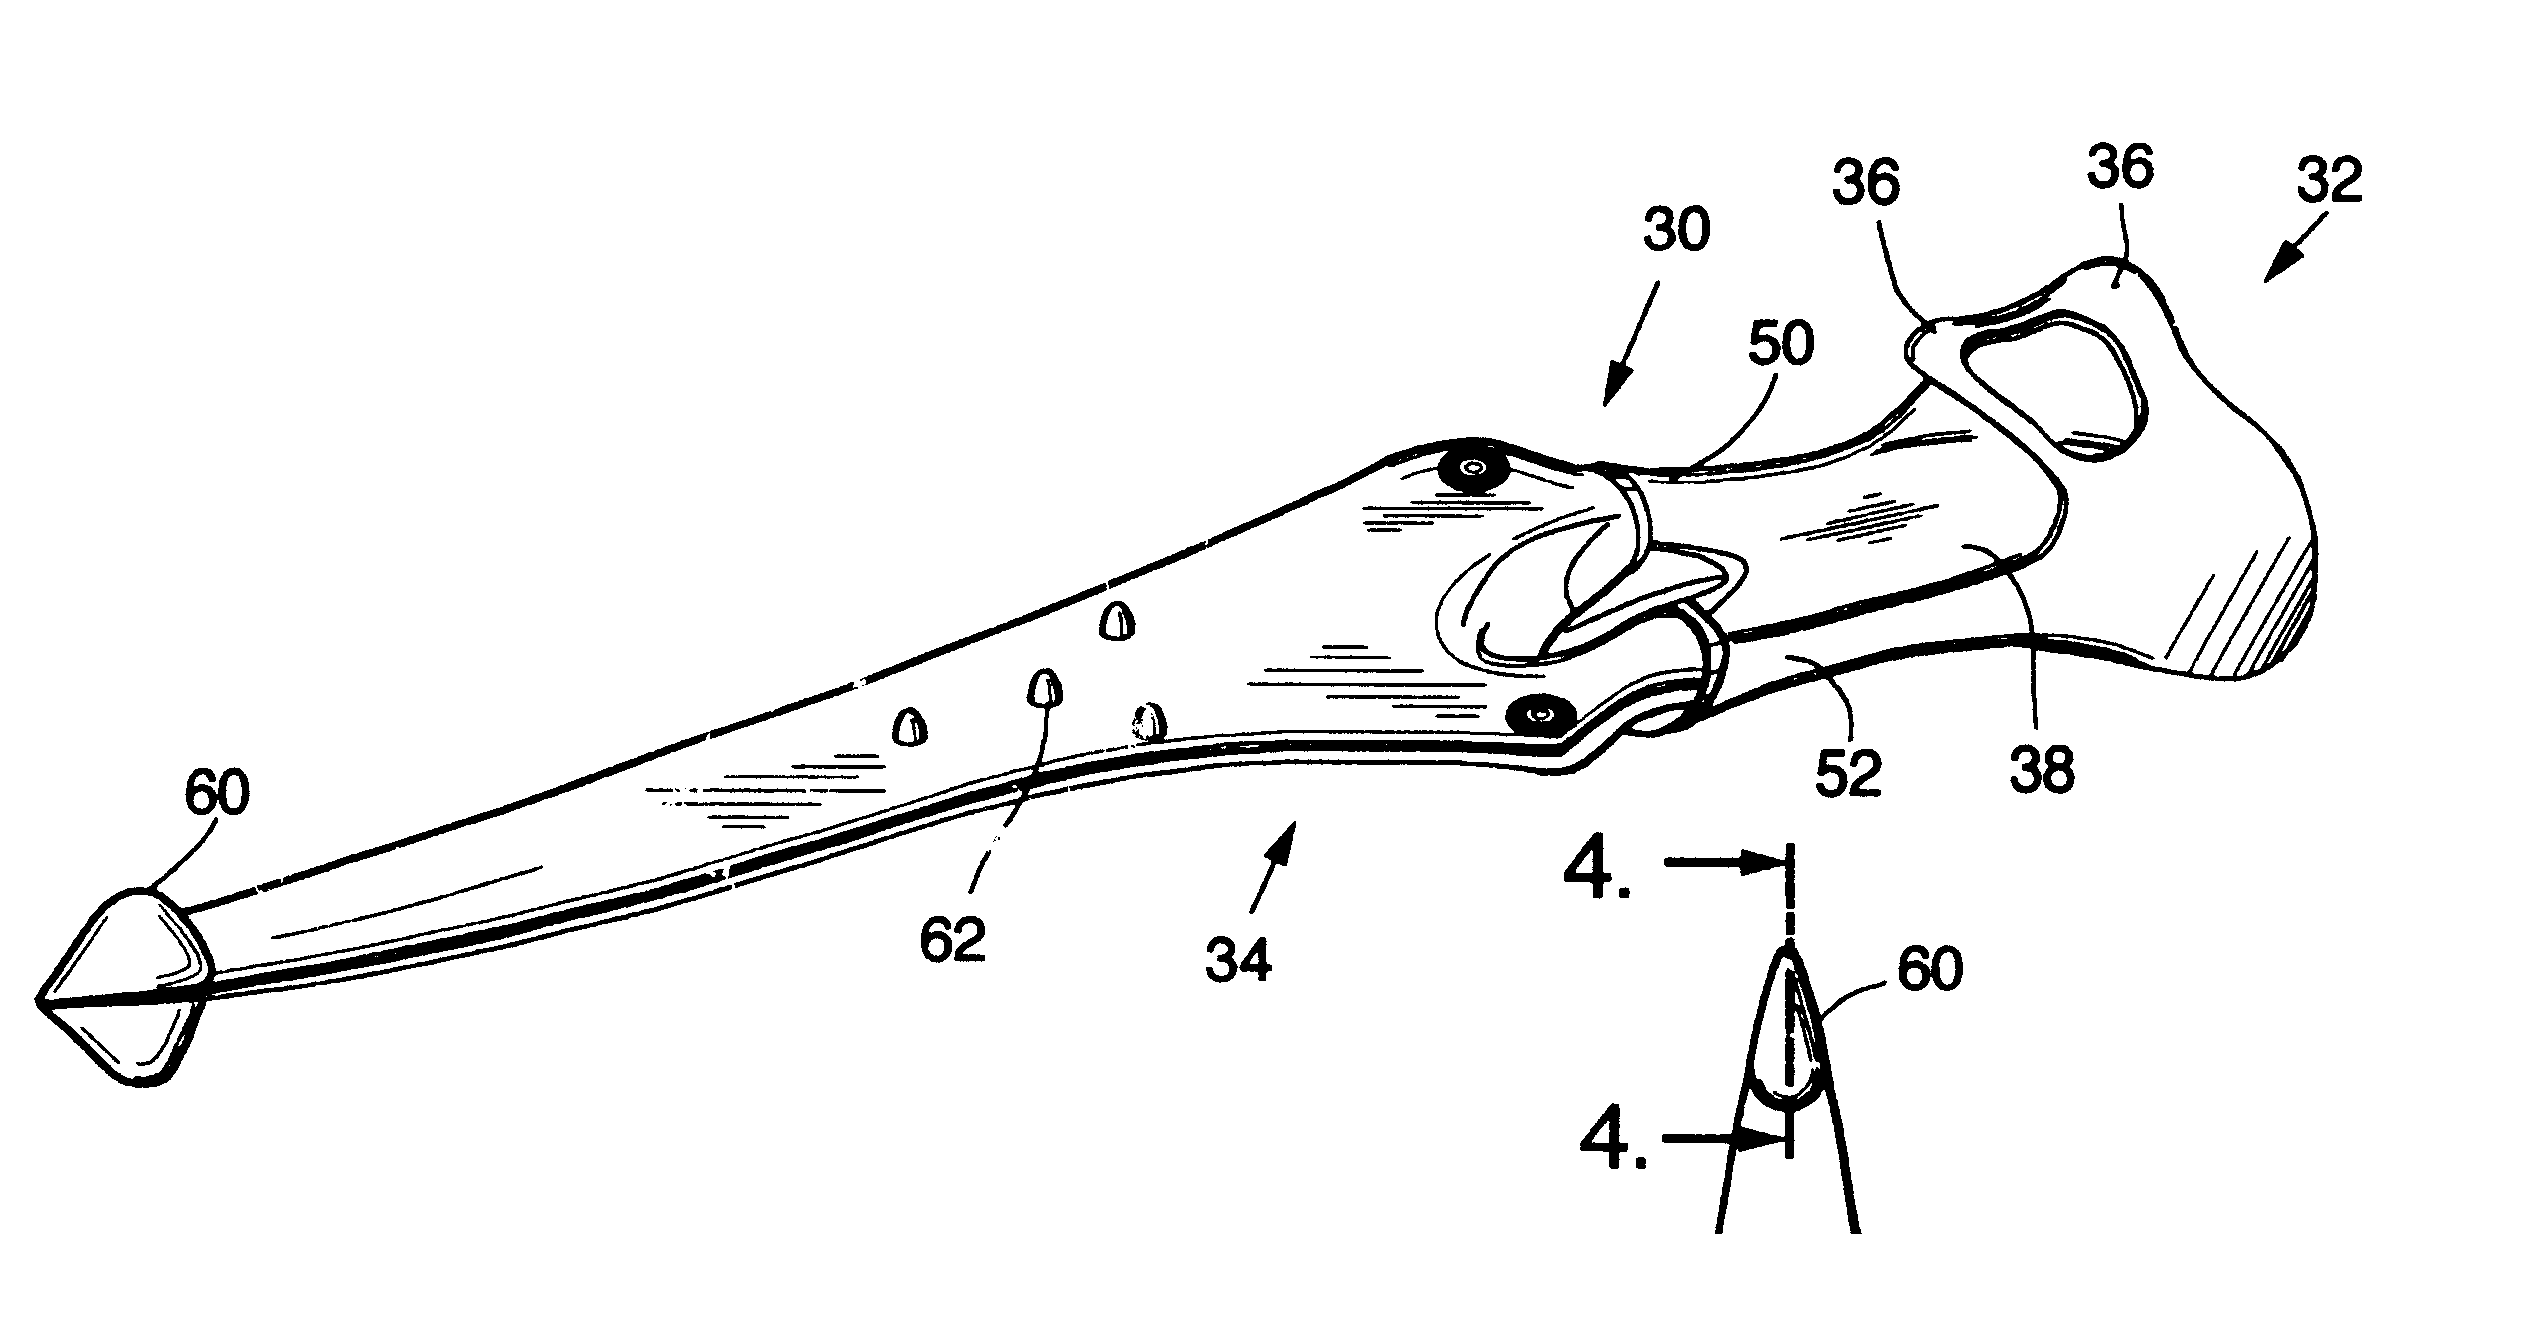 Spear-blade swim fin